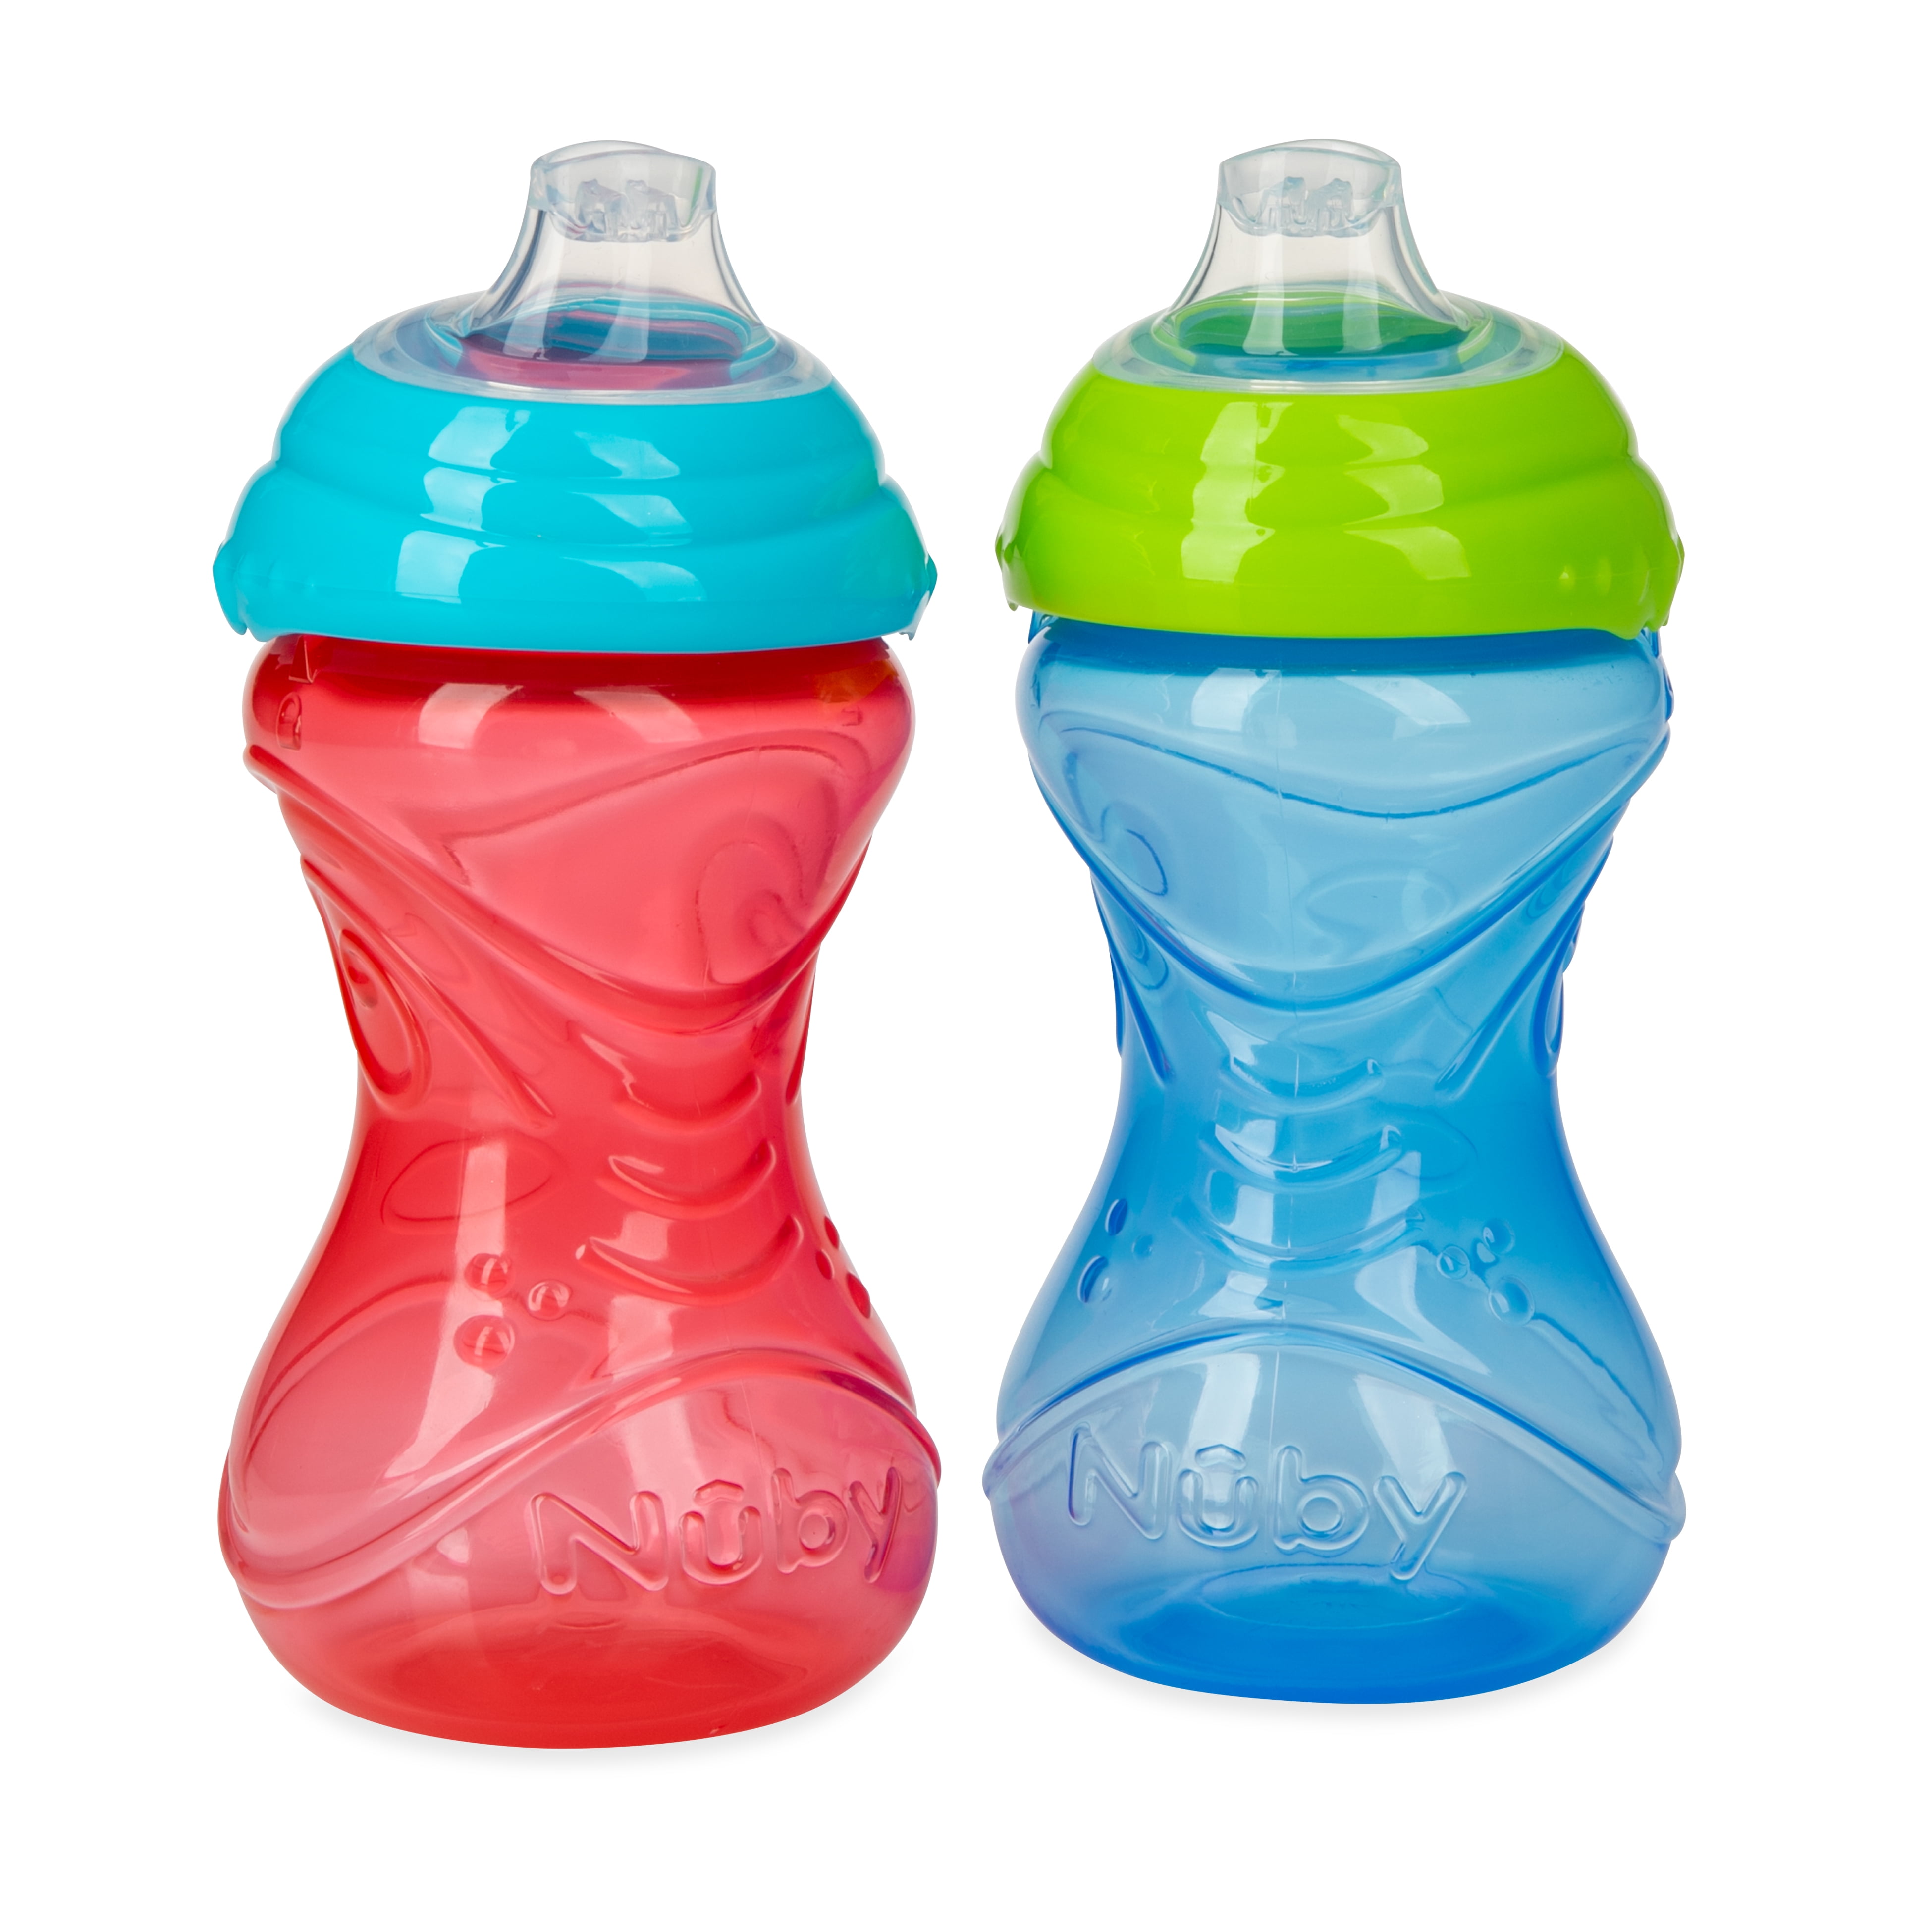 Nuby No-Spill Easy Grip Soft Spout Sippy Cup, 10 fl oz, 3 Count -  Walmart.com